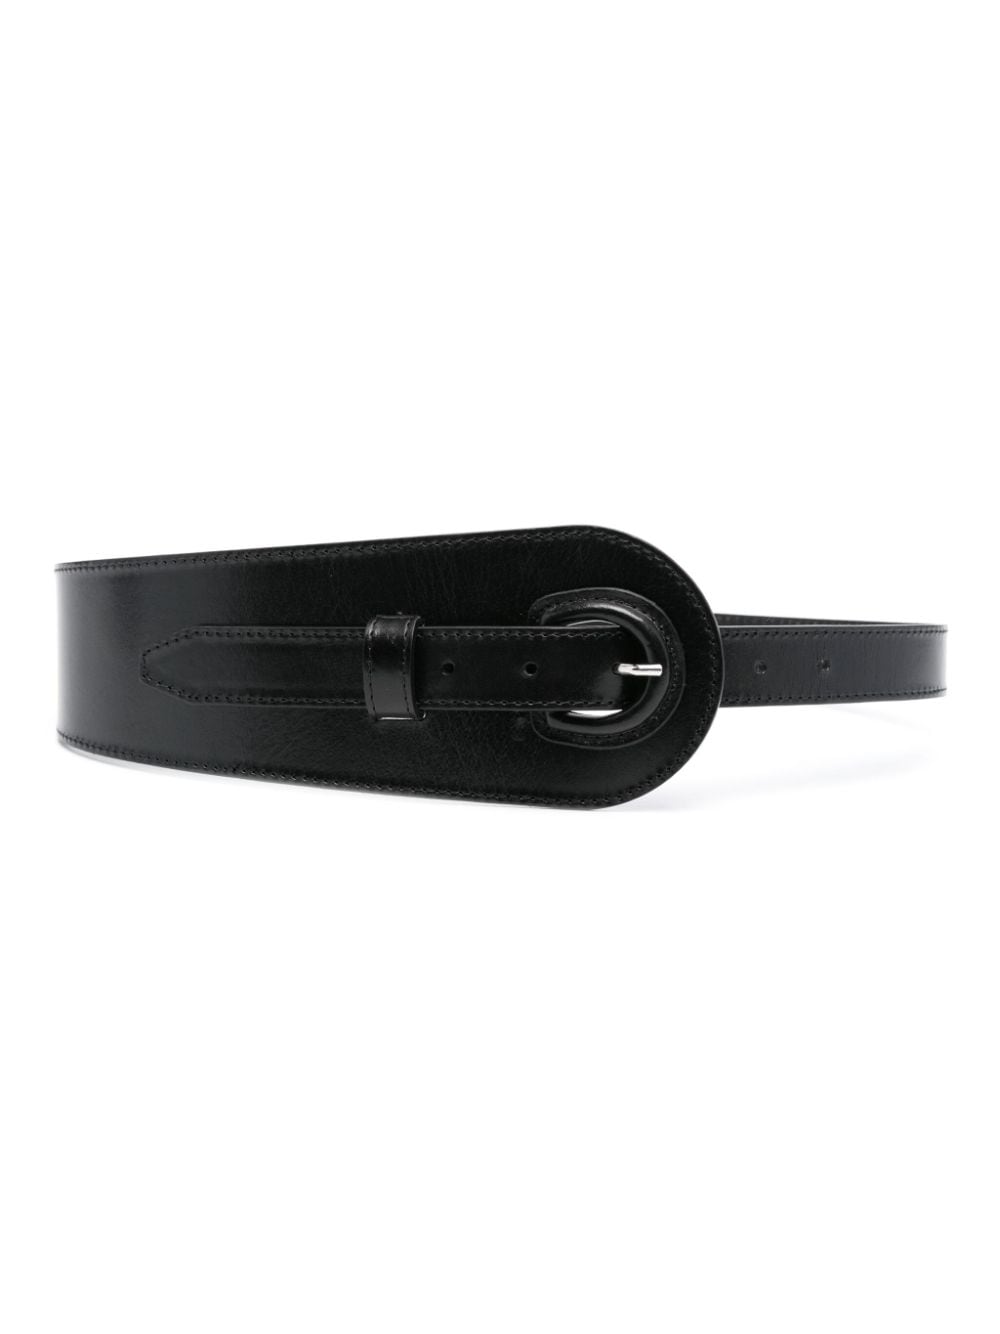 wide leather belt